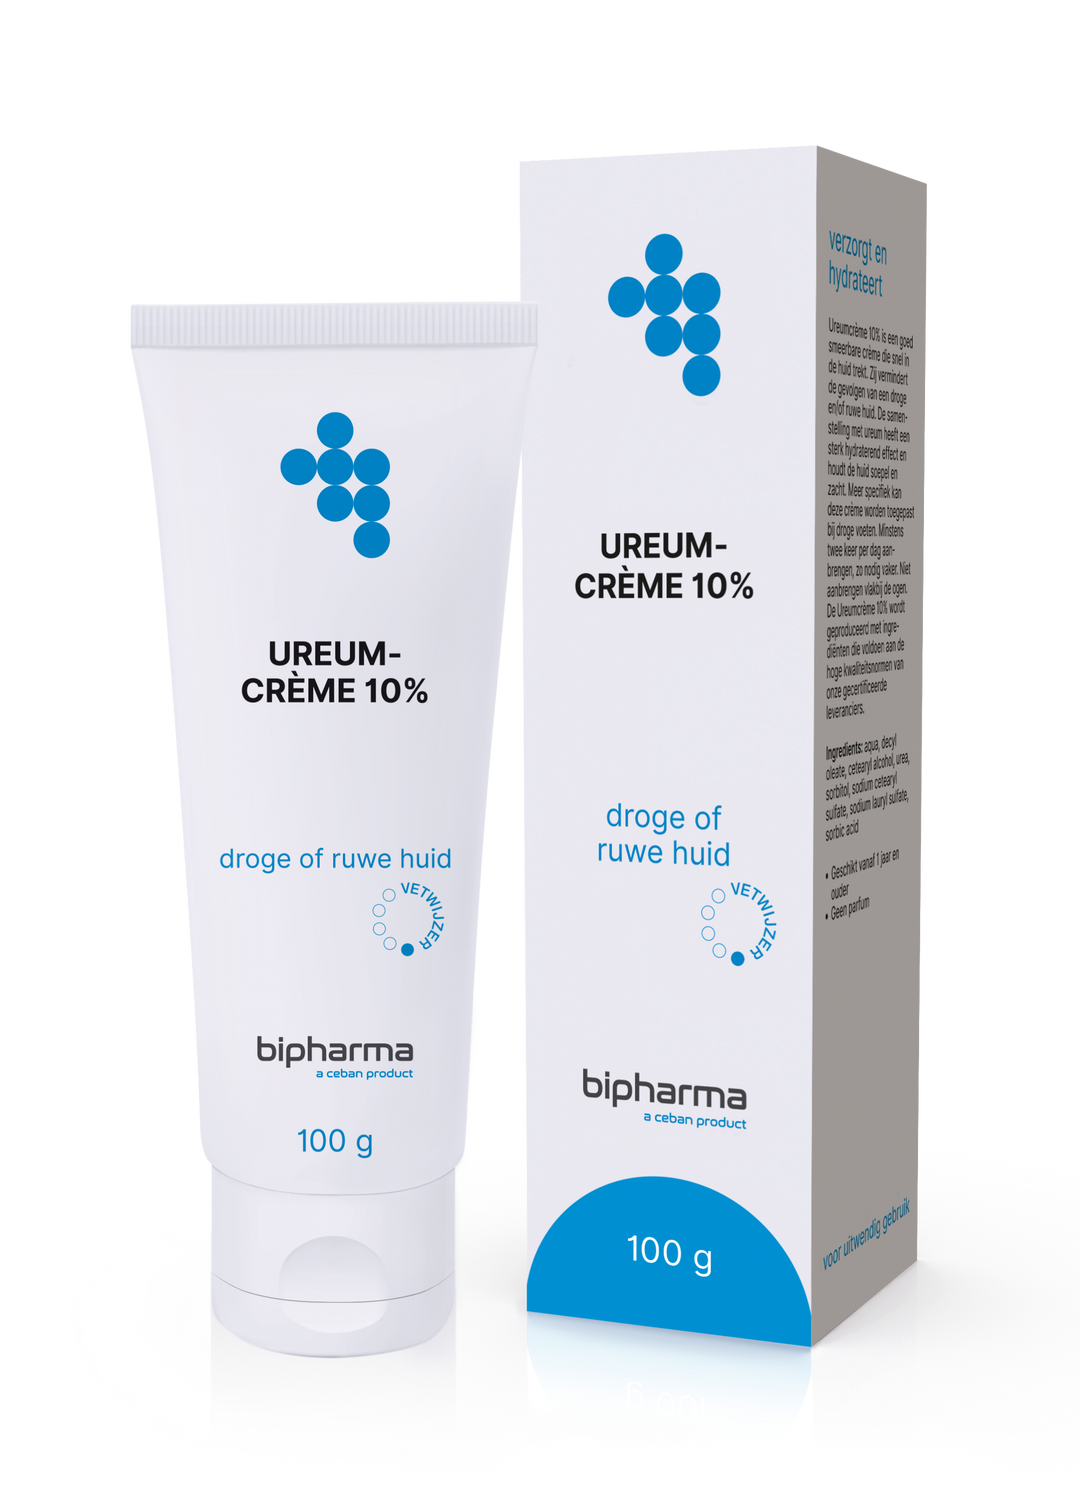 Bipharma Ureum Creme 10% - BIPHARMA BV - Huidproducten.nl